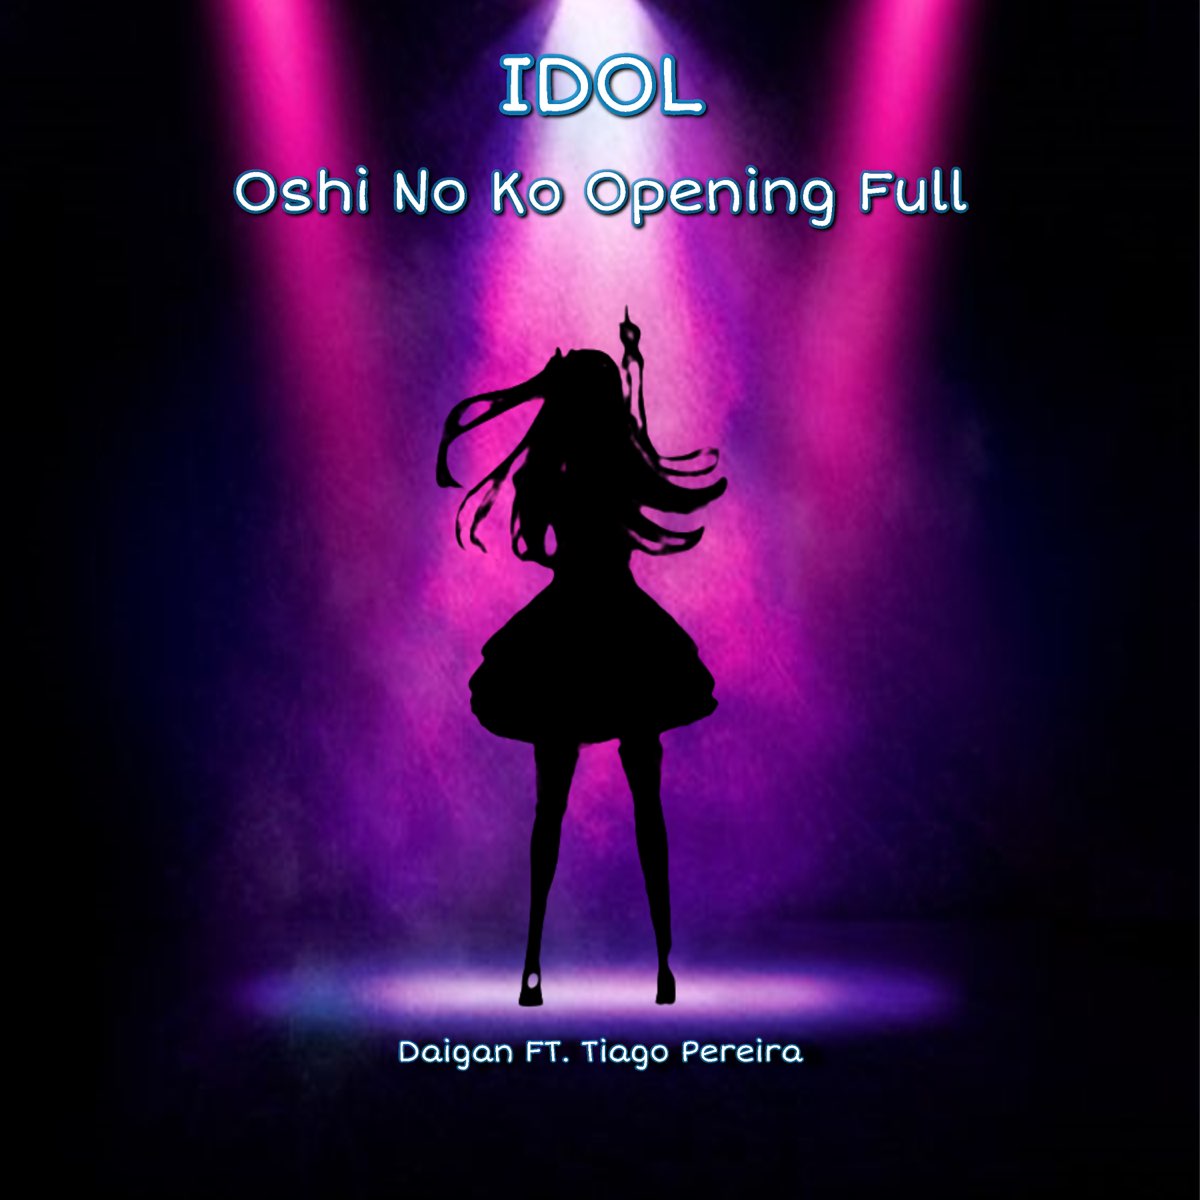 Idol - Oshi No Ko: Japanese Version - song and lyrics by Tiago Pereira